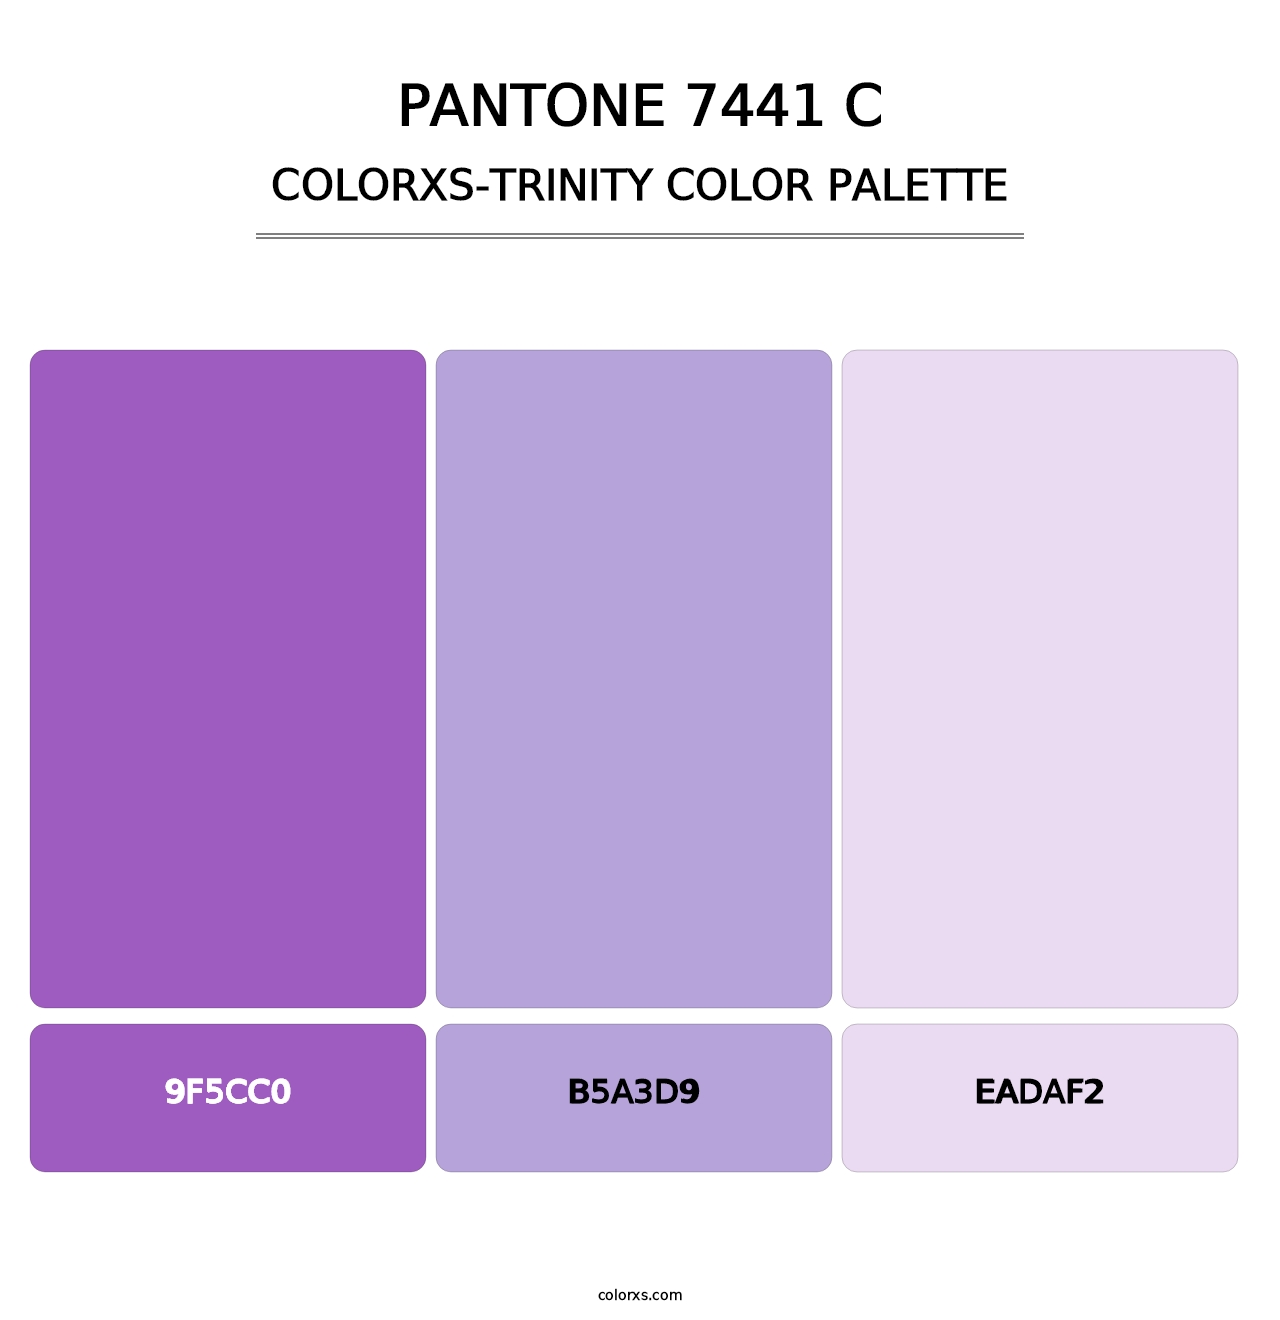 PANTONE 7441 C - Colorxs Trinity Palette